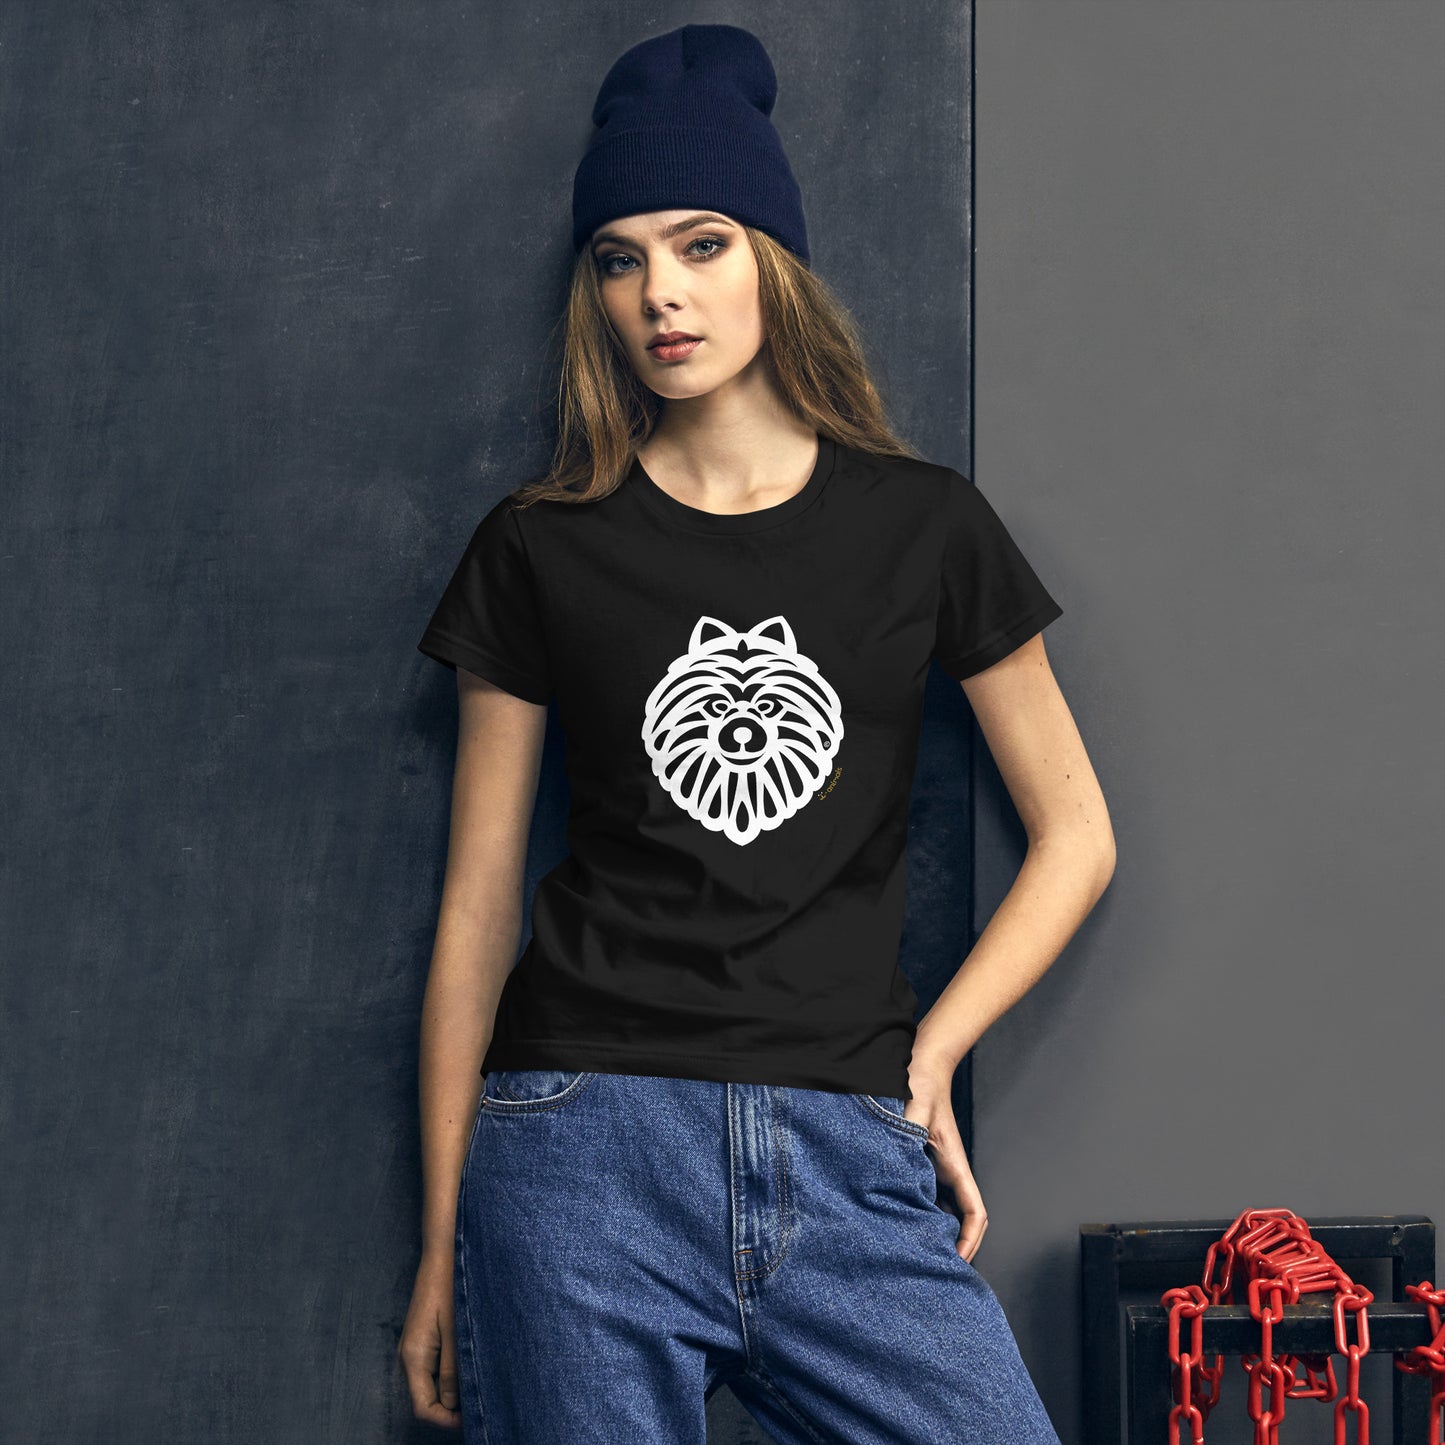 Women's Fashion Fit T-Shirt - German Spitz - Tribal